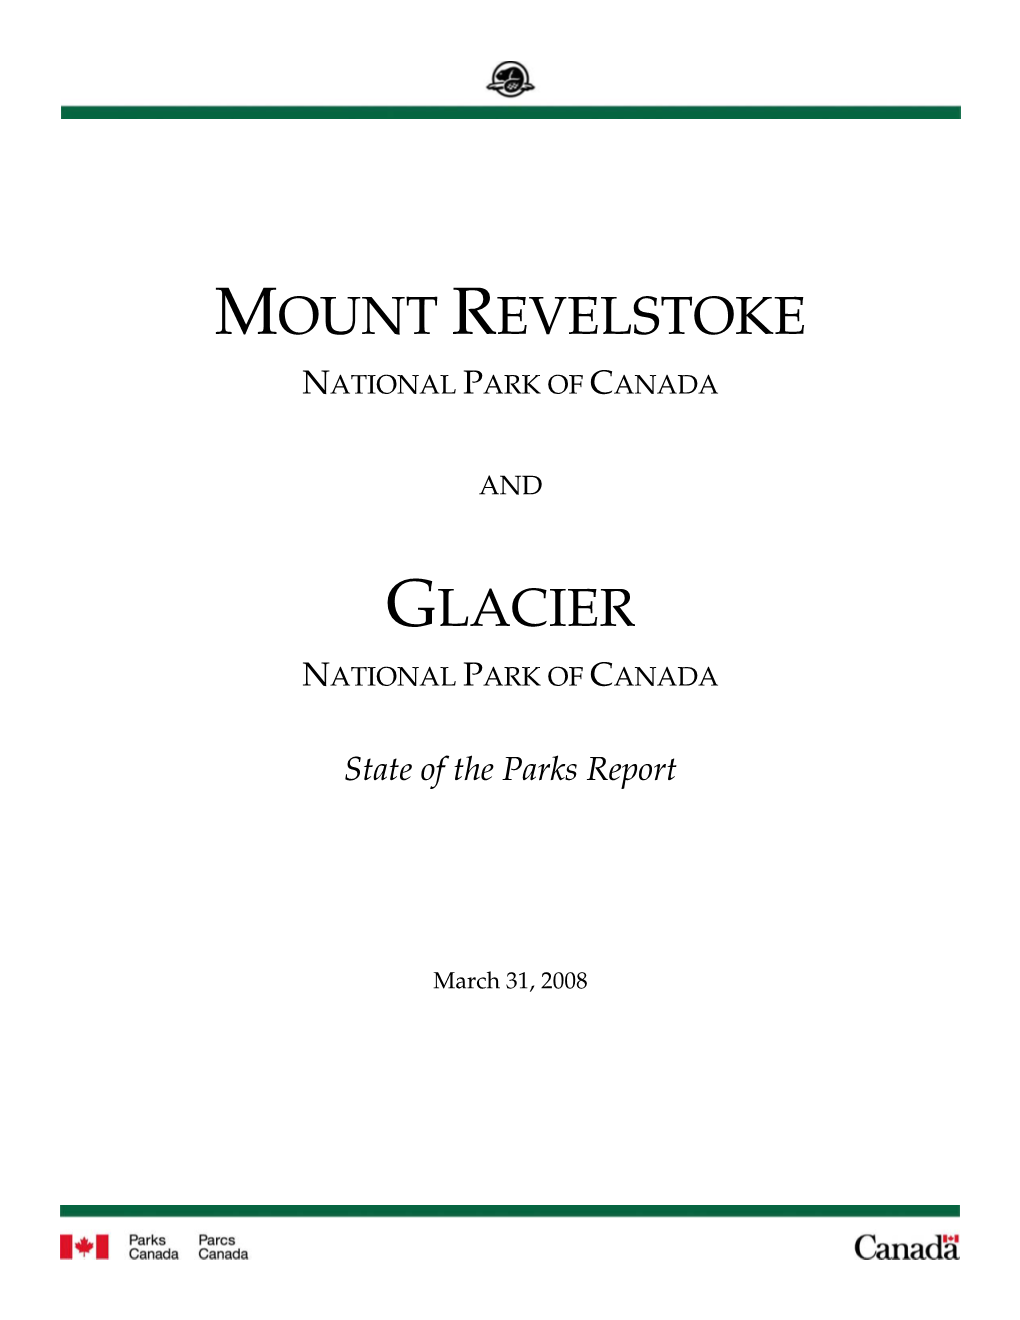 Mount Revelstoke Glacier